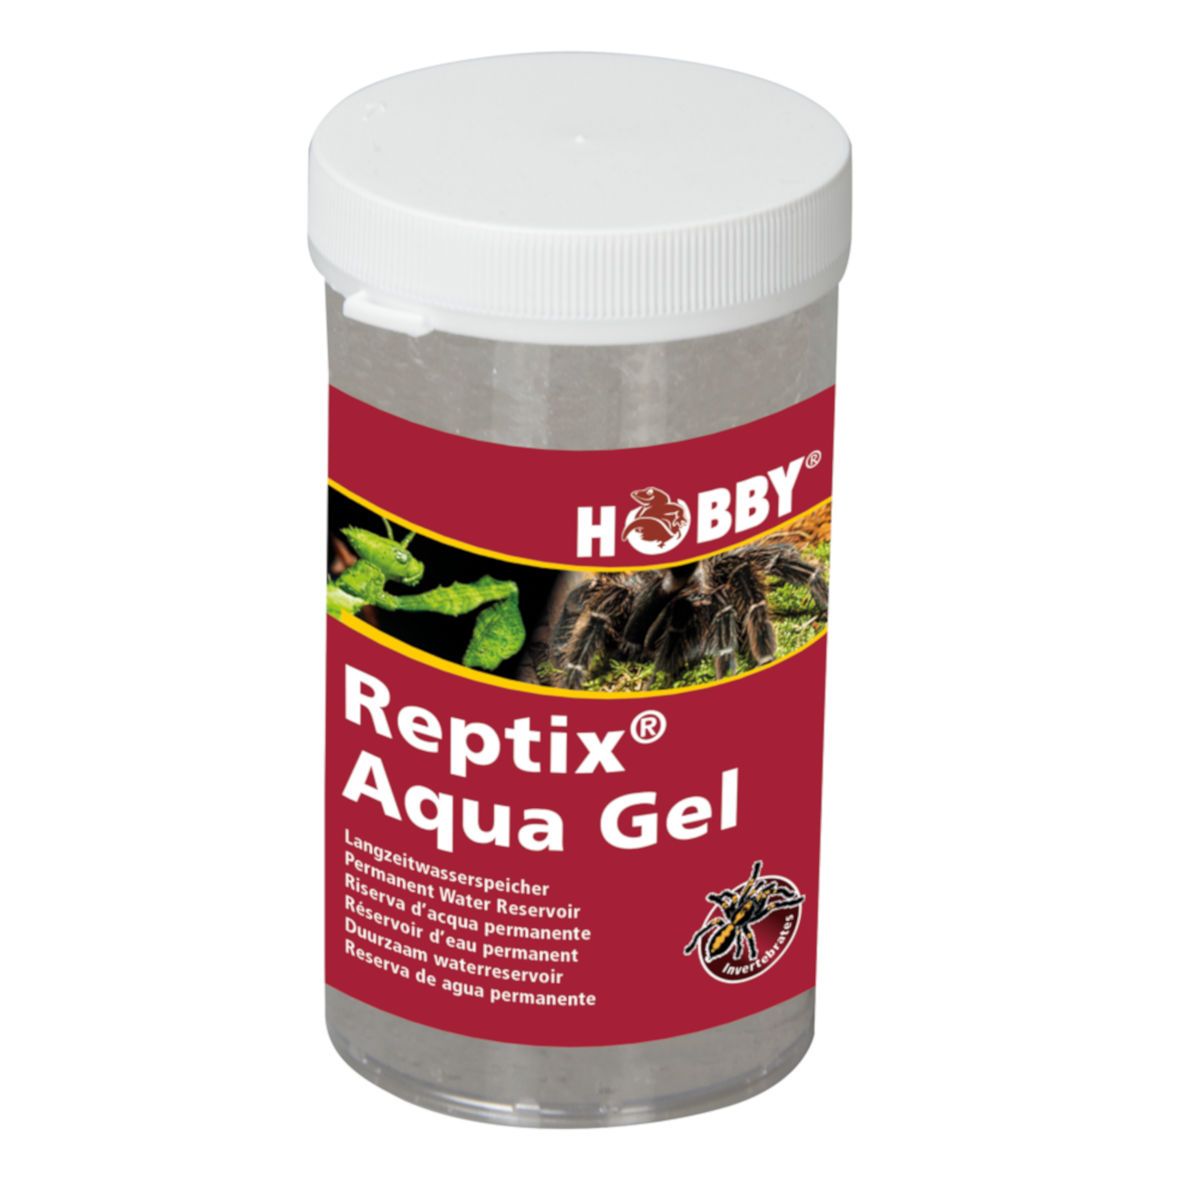 Hobby Reptix Aqua Gel, Wasserspeichergel